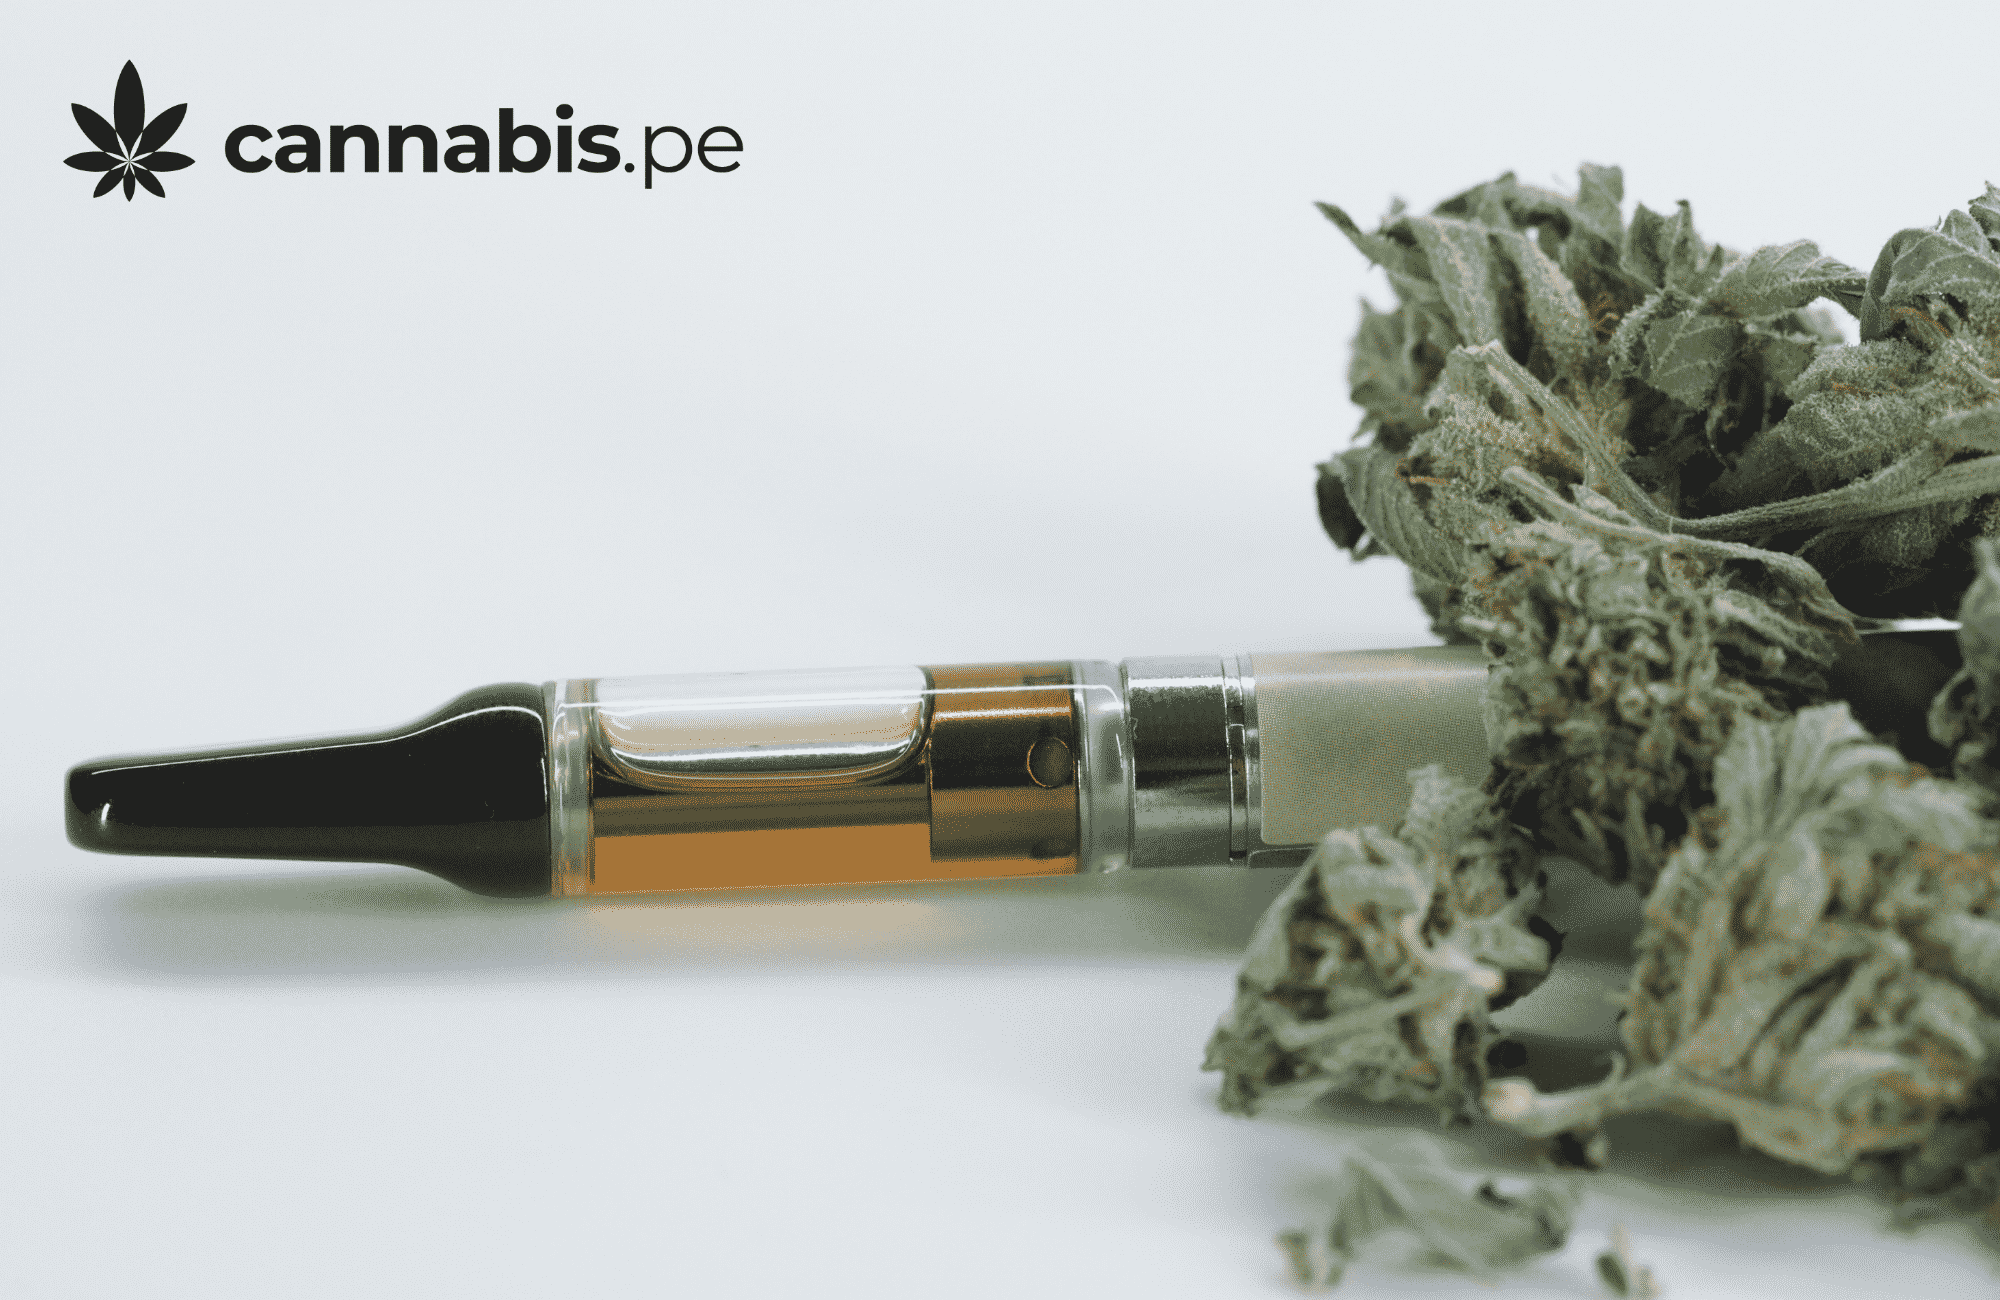 vapear cannabis es mas seguro que fumarla cannabis medicinal en peru cannabis.pe